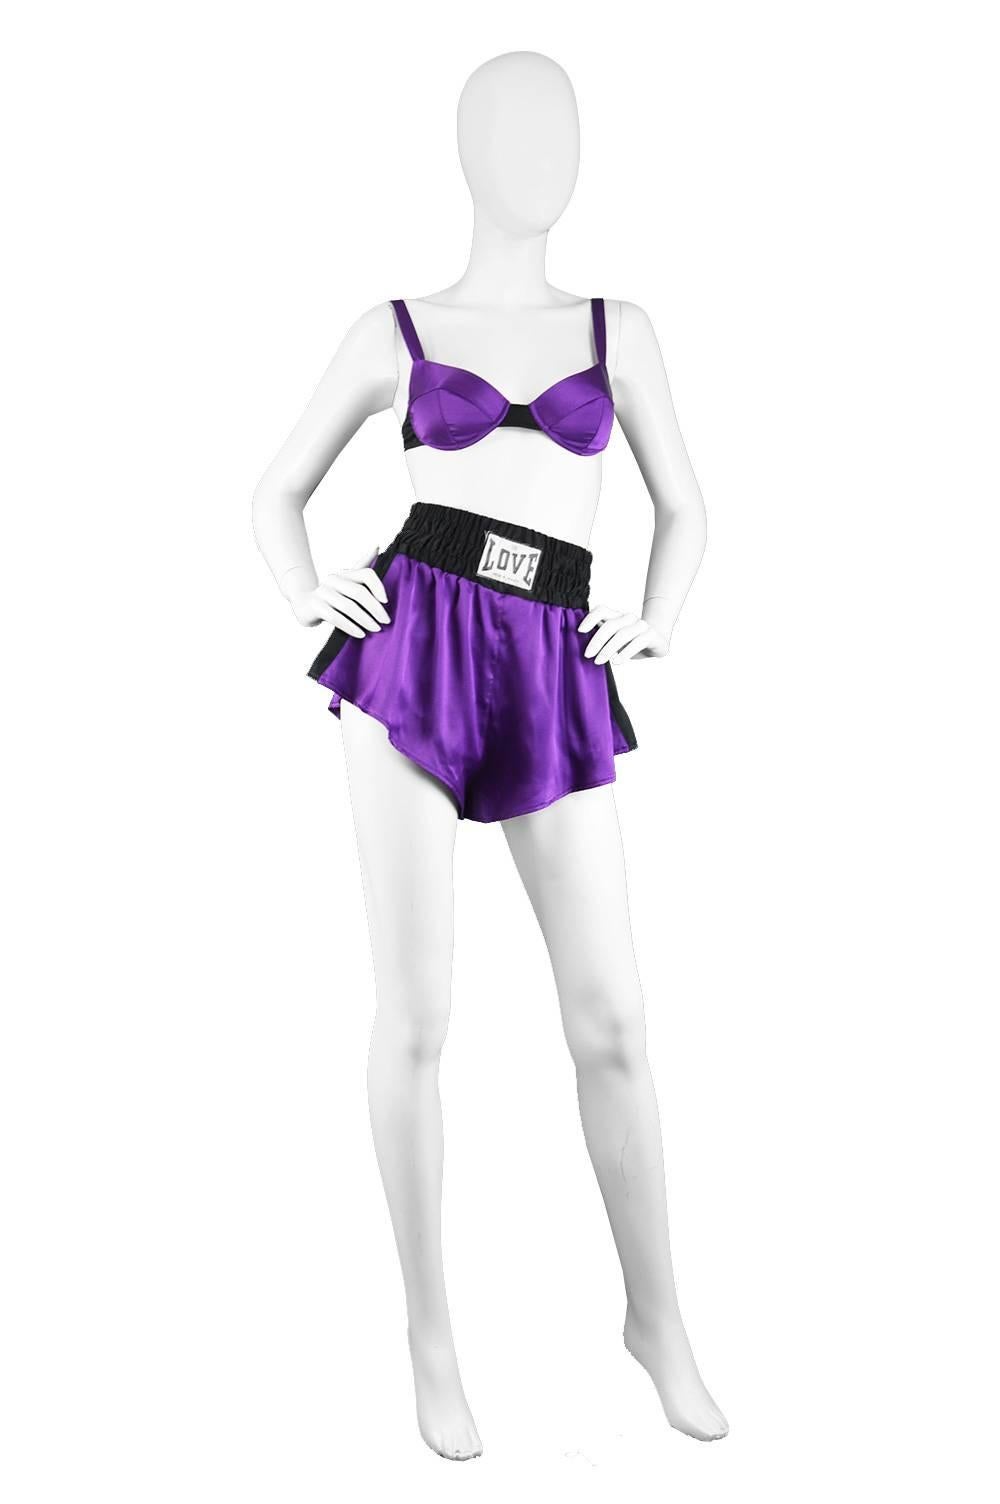 Moschino Lingerie Vintage 1990s Purple Satin Bra & Boxer Style Shorts Set

Estimated Size: UK 10/ US 6/ EU 38. Please check measurements. 
Bra Top
Bust - 32” / 81cm
Length (Shoulder to Hem) - 11” / 28cm

Shorts
Waist - Stretches from 24-28” /